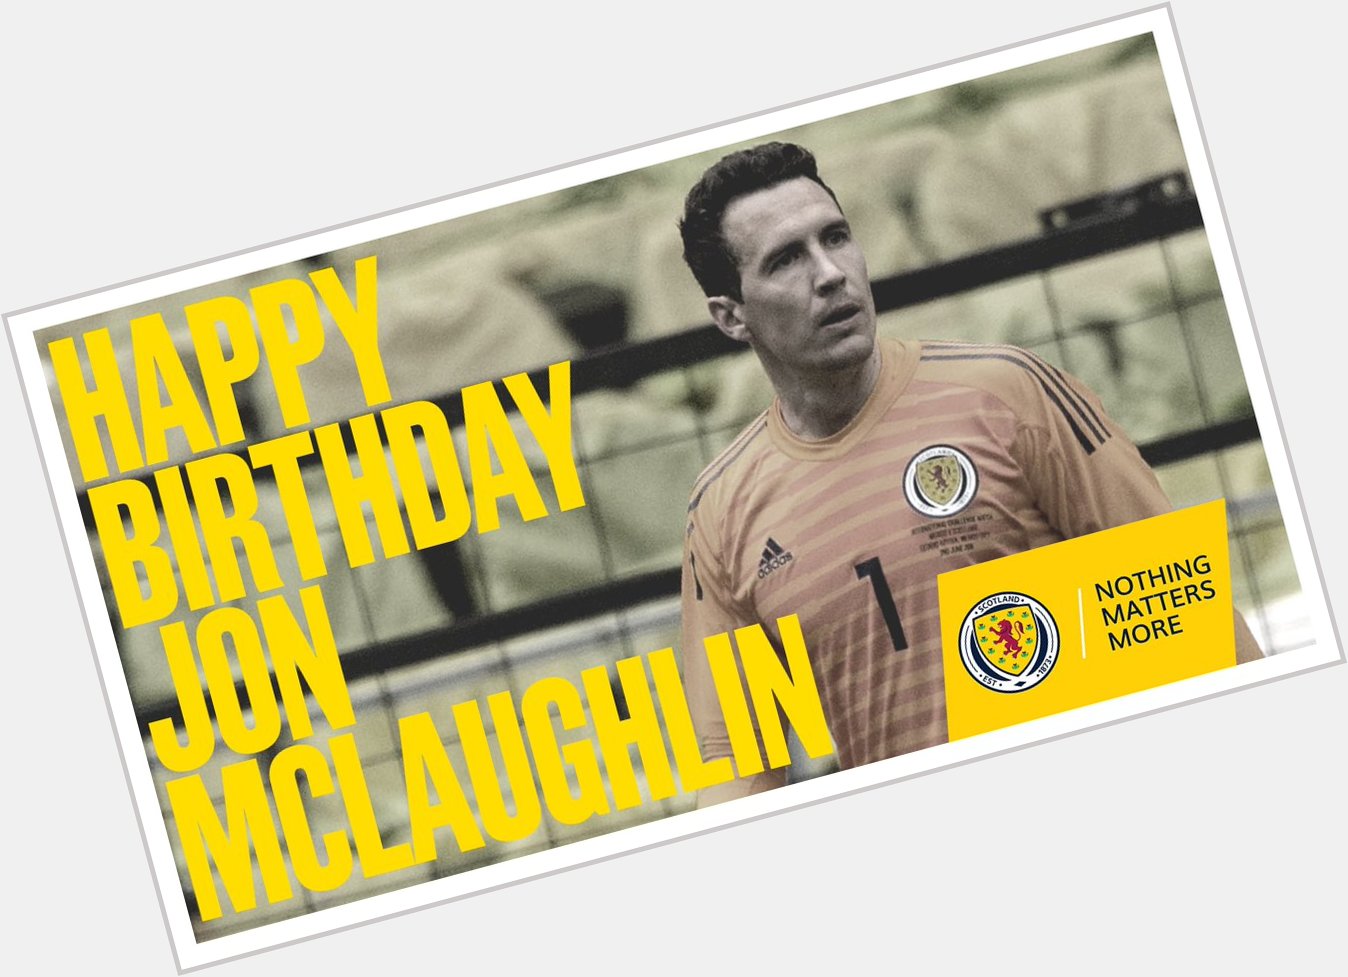  | Wishing a Happy Birthday to Scotland \keeper Jon McLaughlin. 